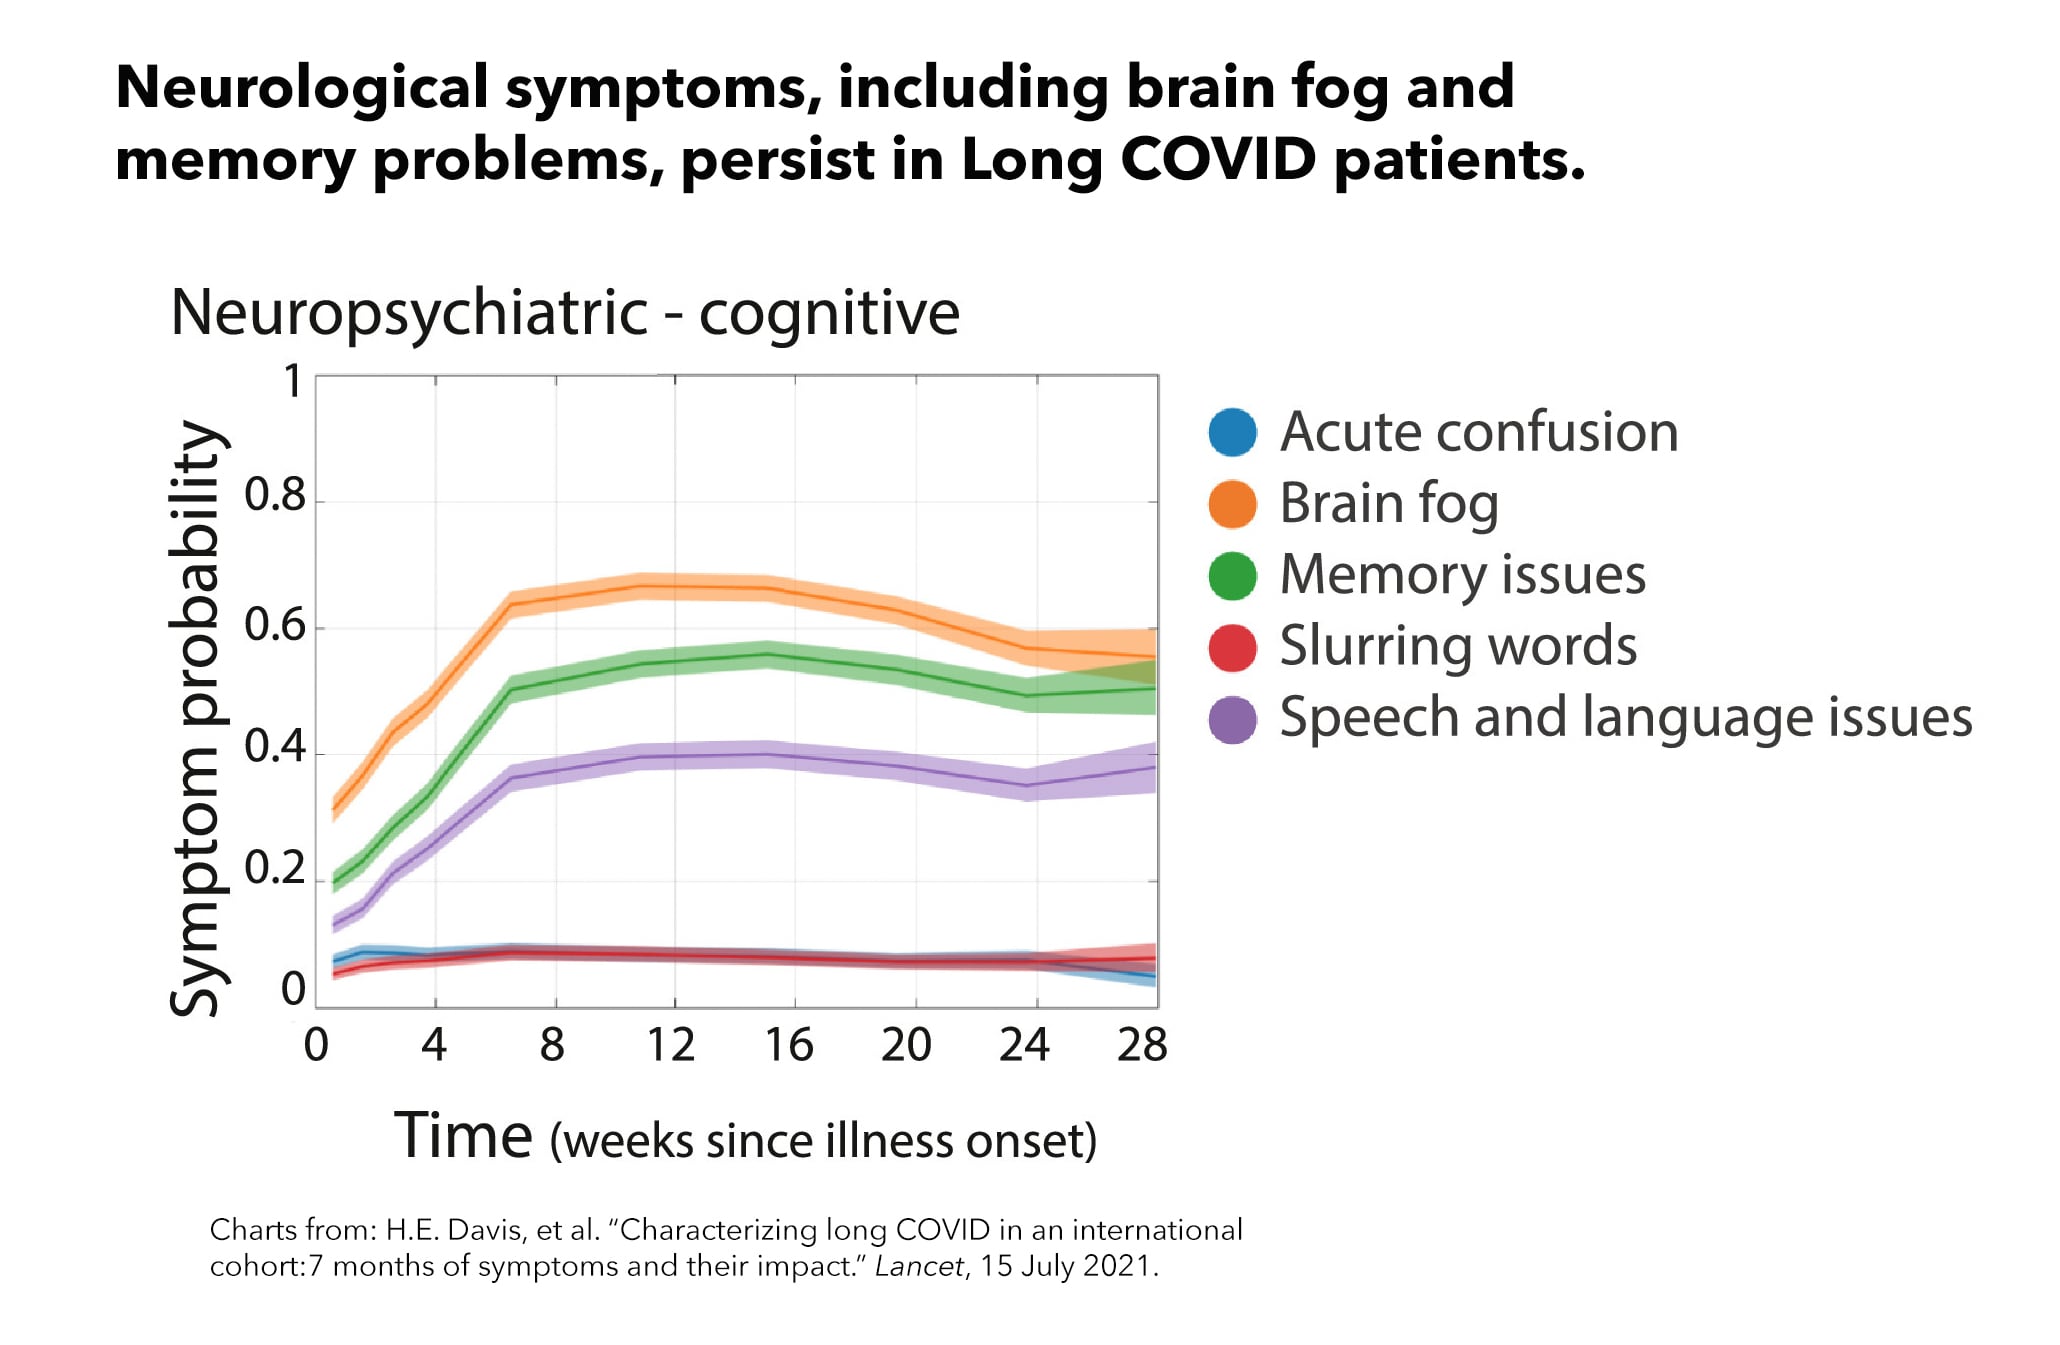 A graph showing neurological symptoms for long COVID patients